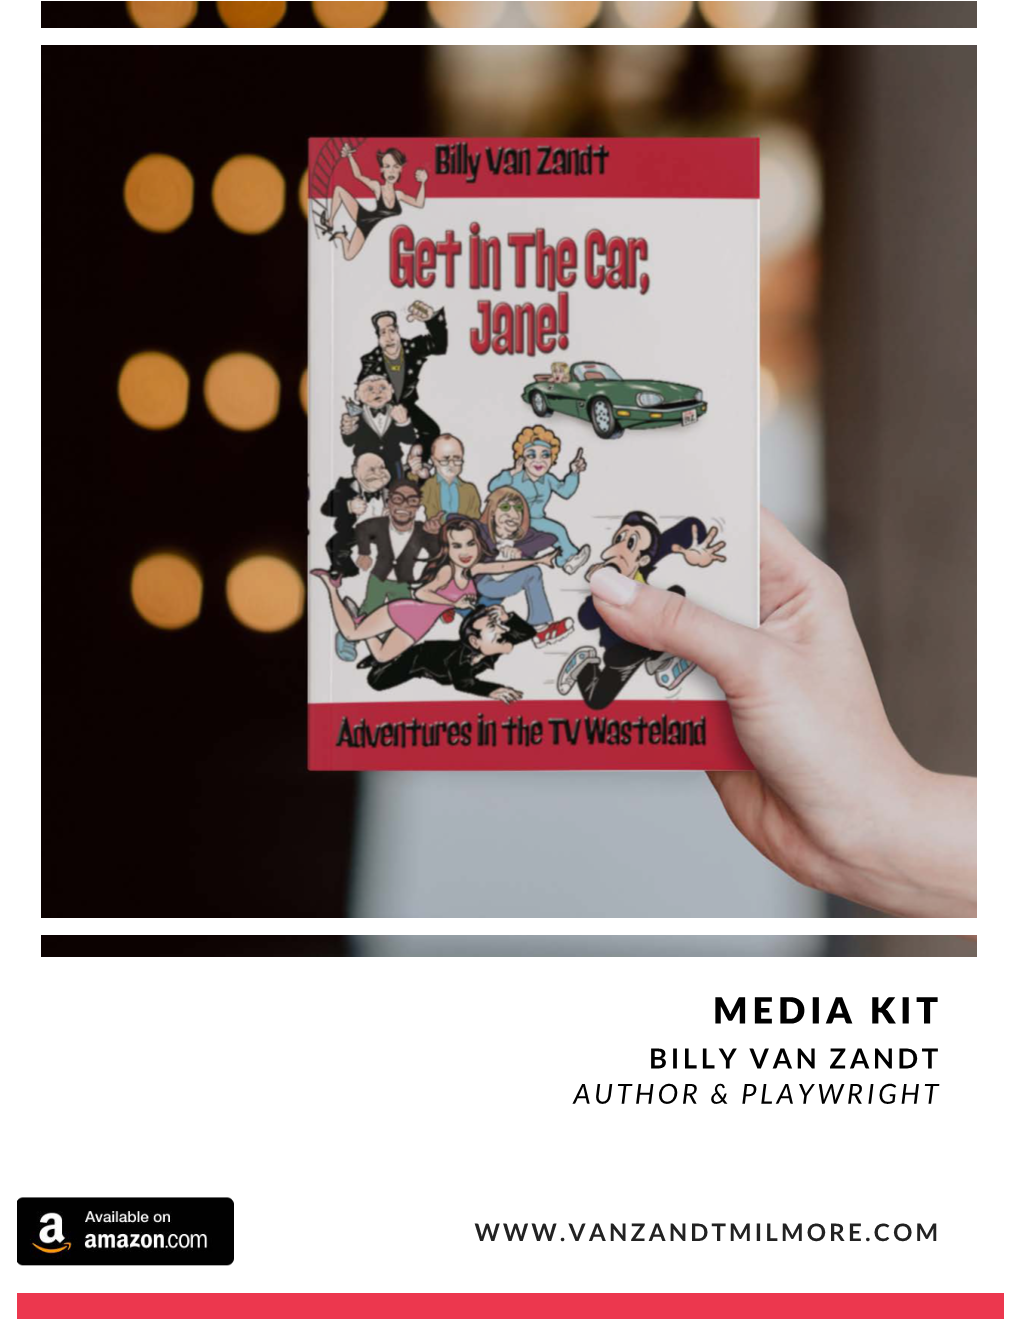 Billy Van Zandt Media